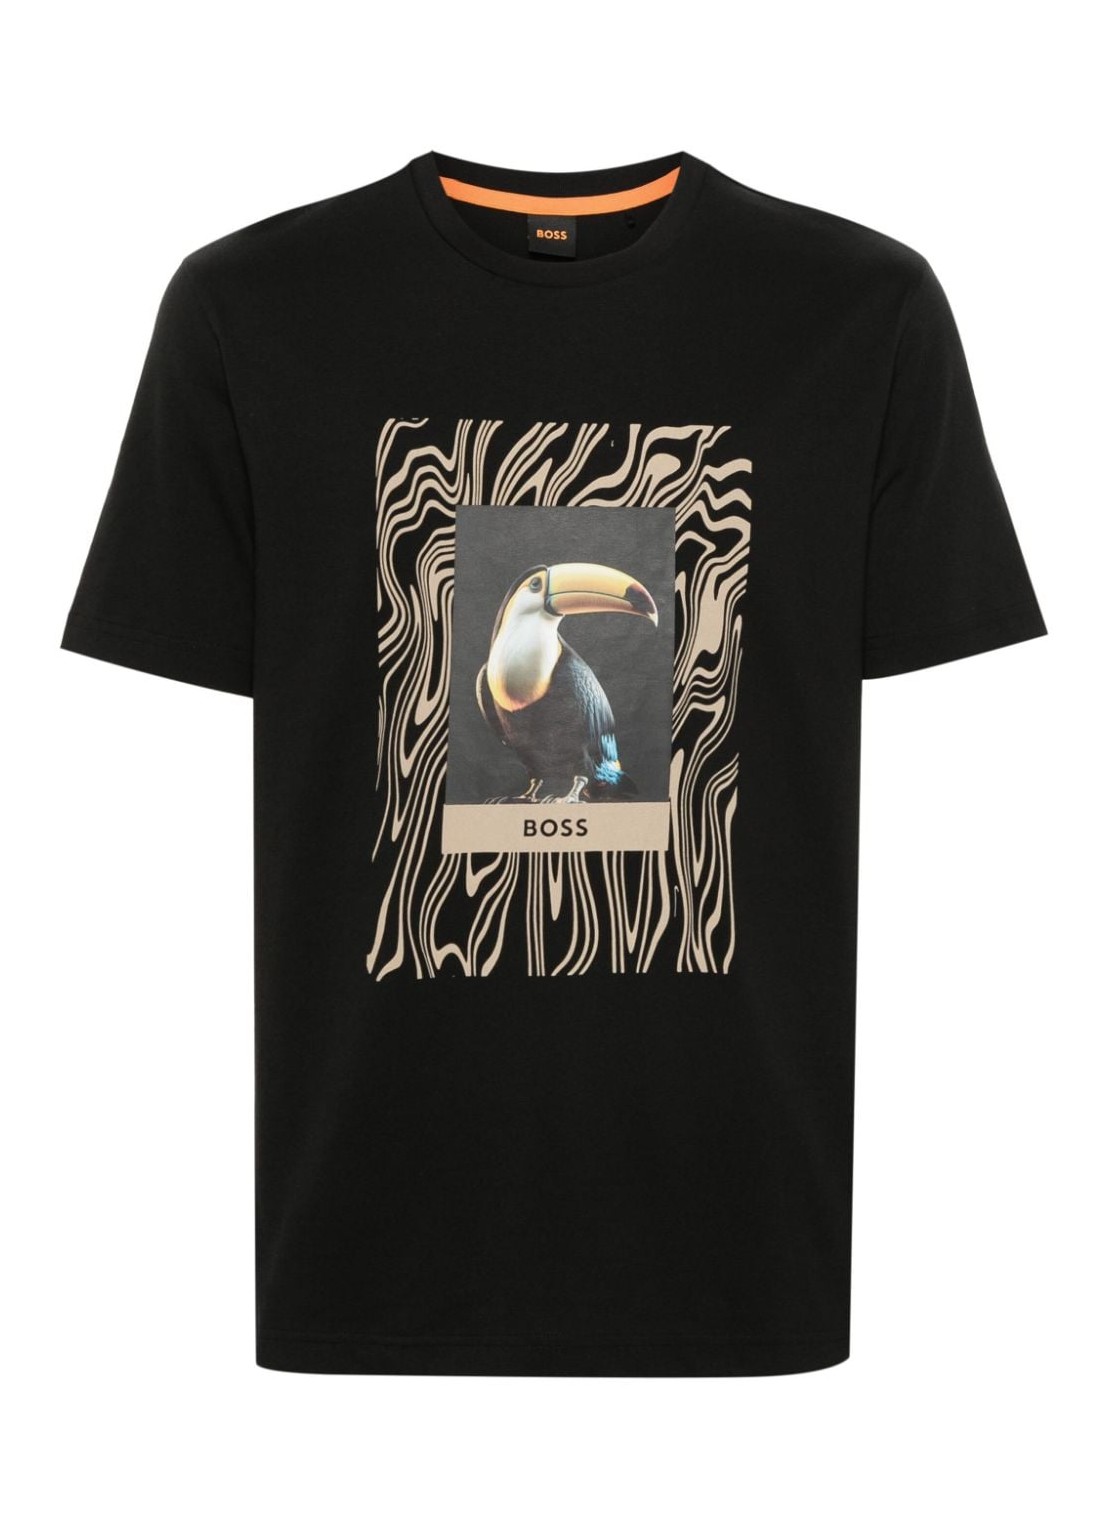 Camiseta boss t-shirt mante_tucan - 50516012 002 talla 3XL
 